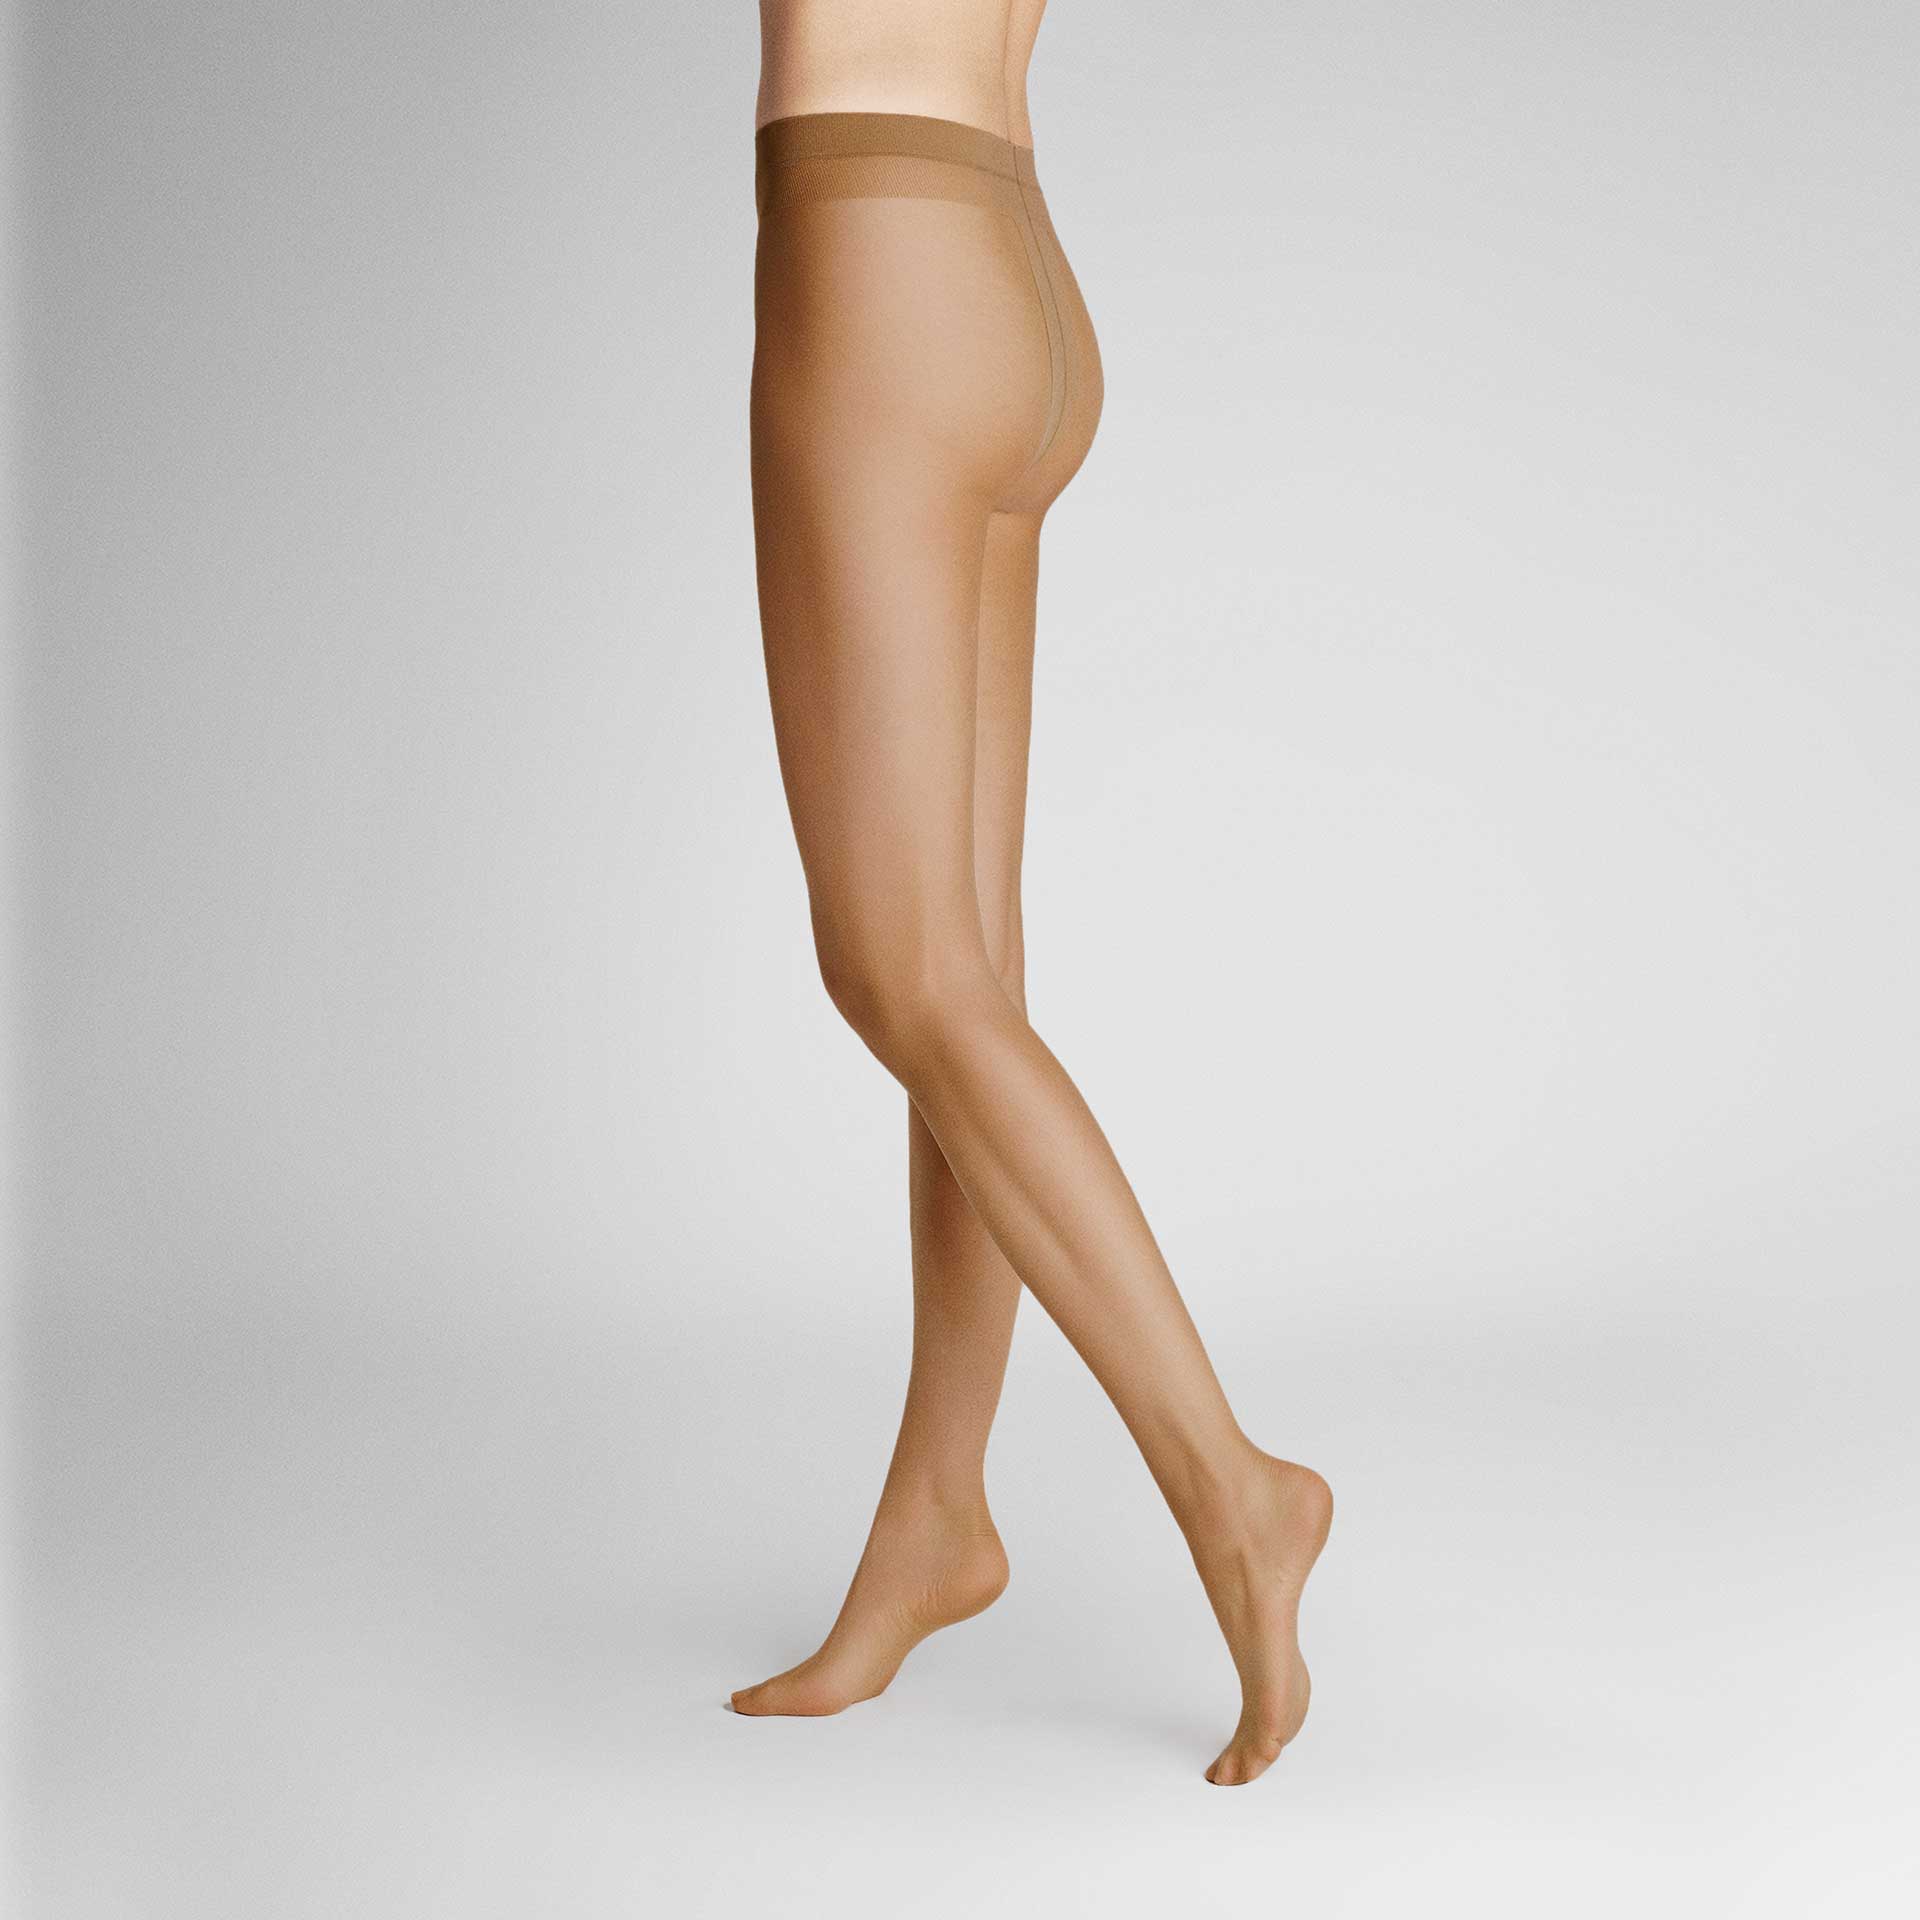 HUDSON Damen LIGHT 8 -  36/38 - Strumpfhose im perfekten Nude-Look - Brasil (Dunkel Beige)